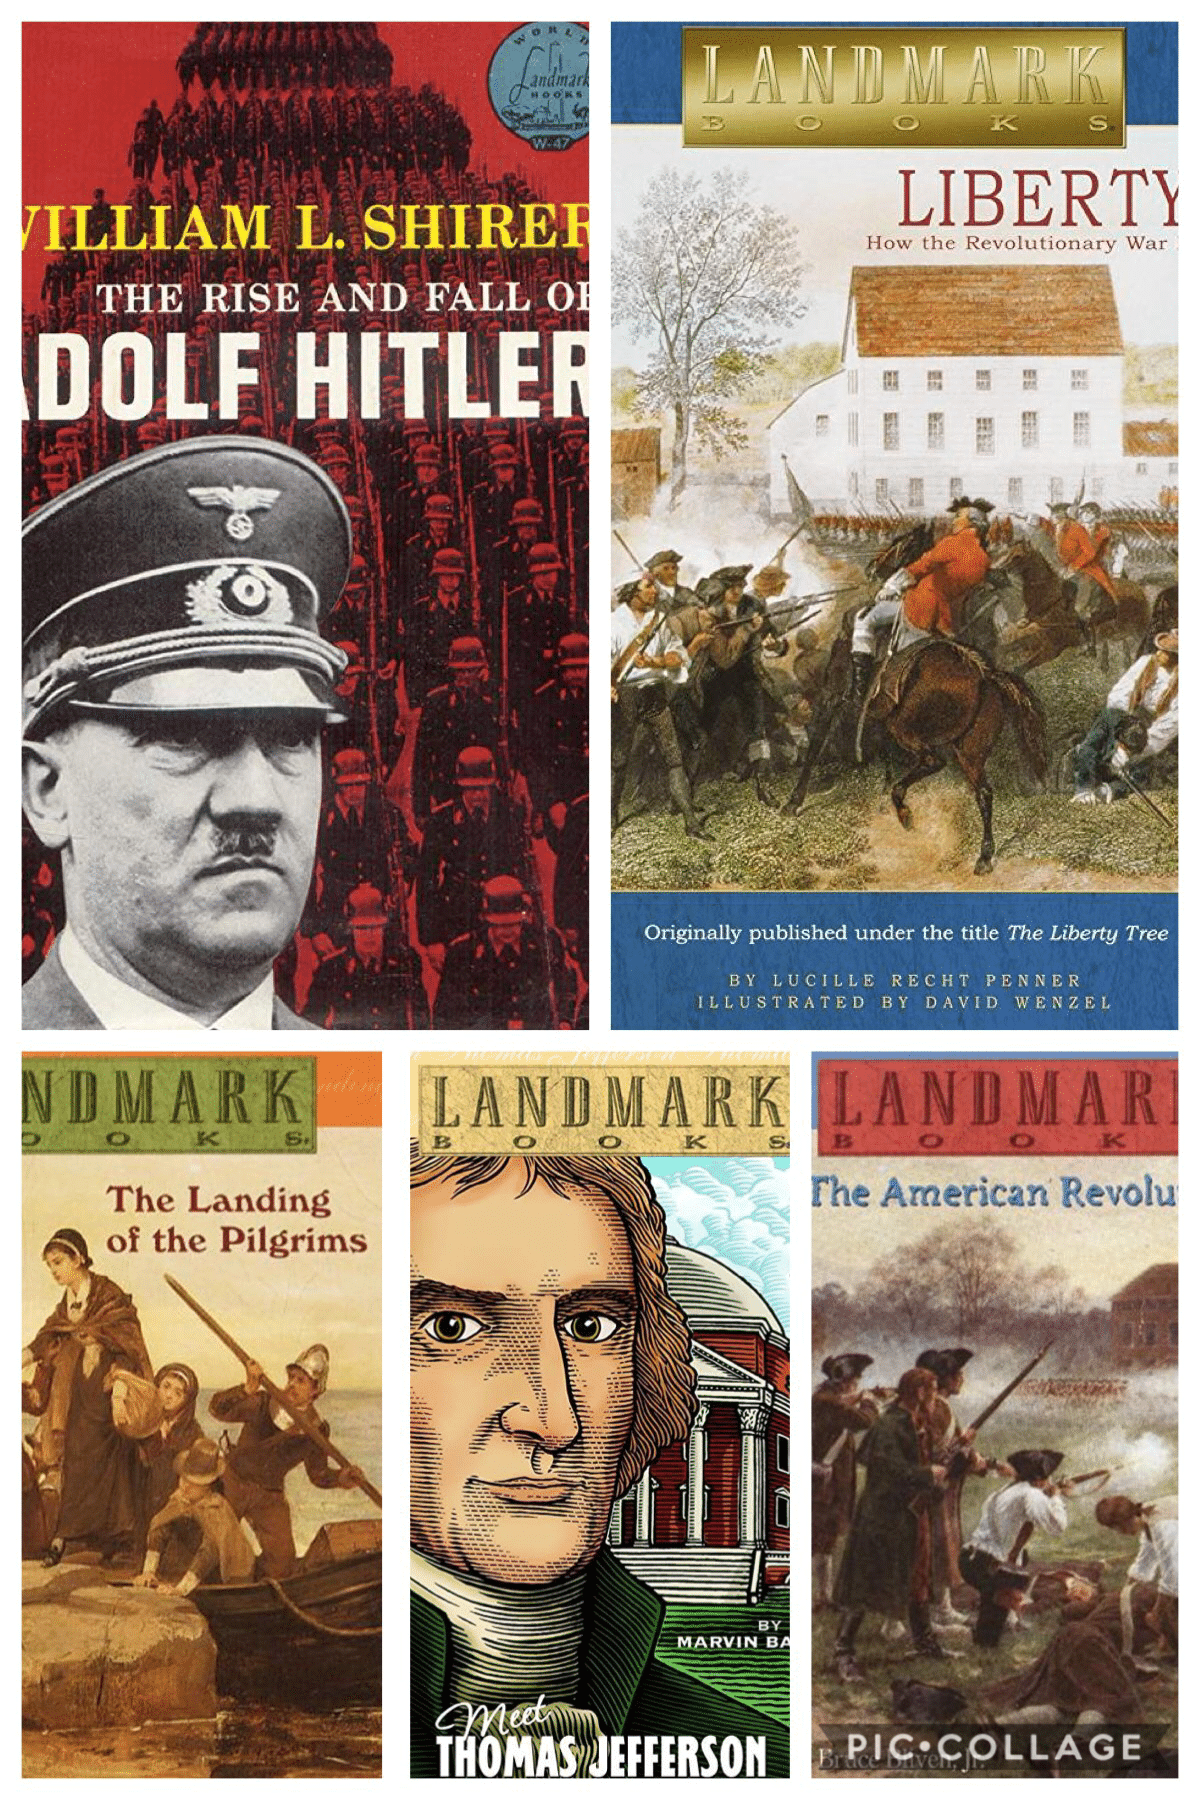 The Landmark Book Series